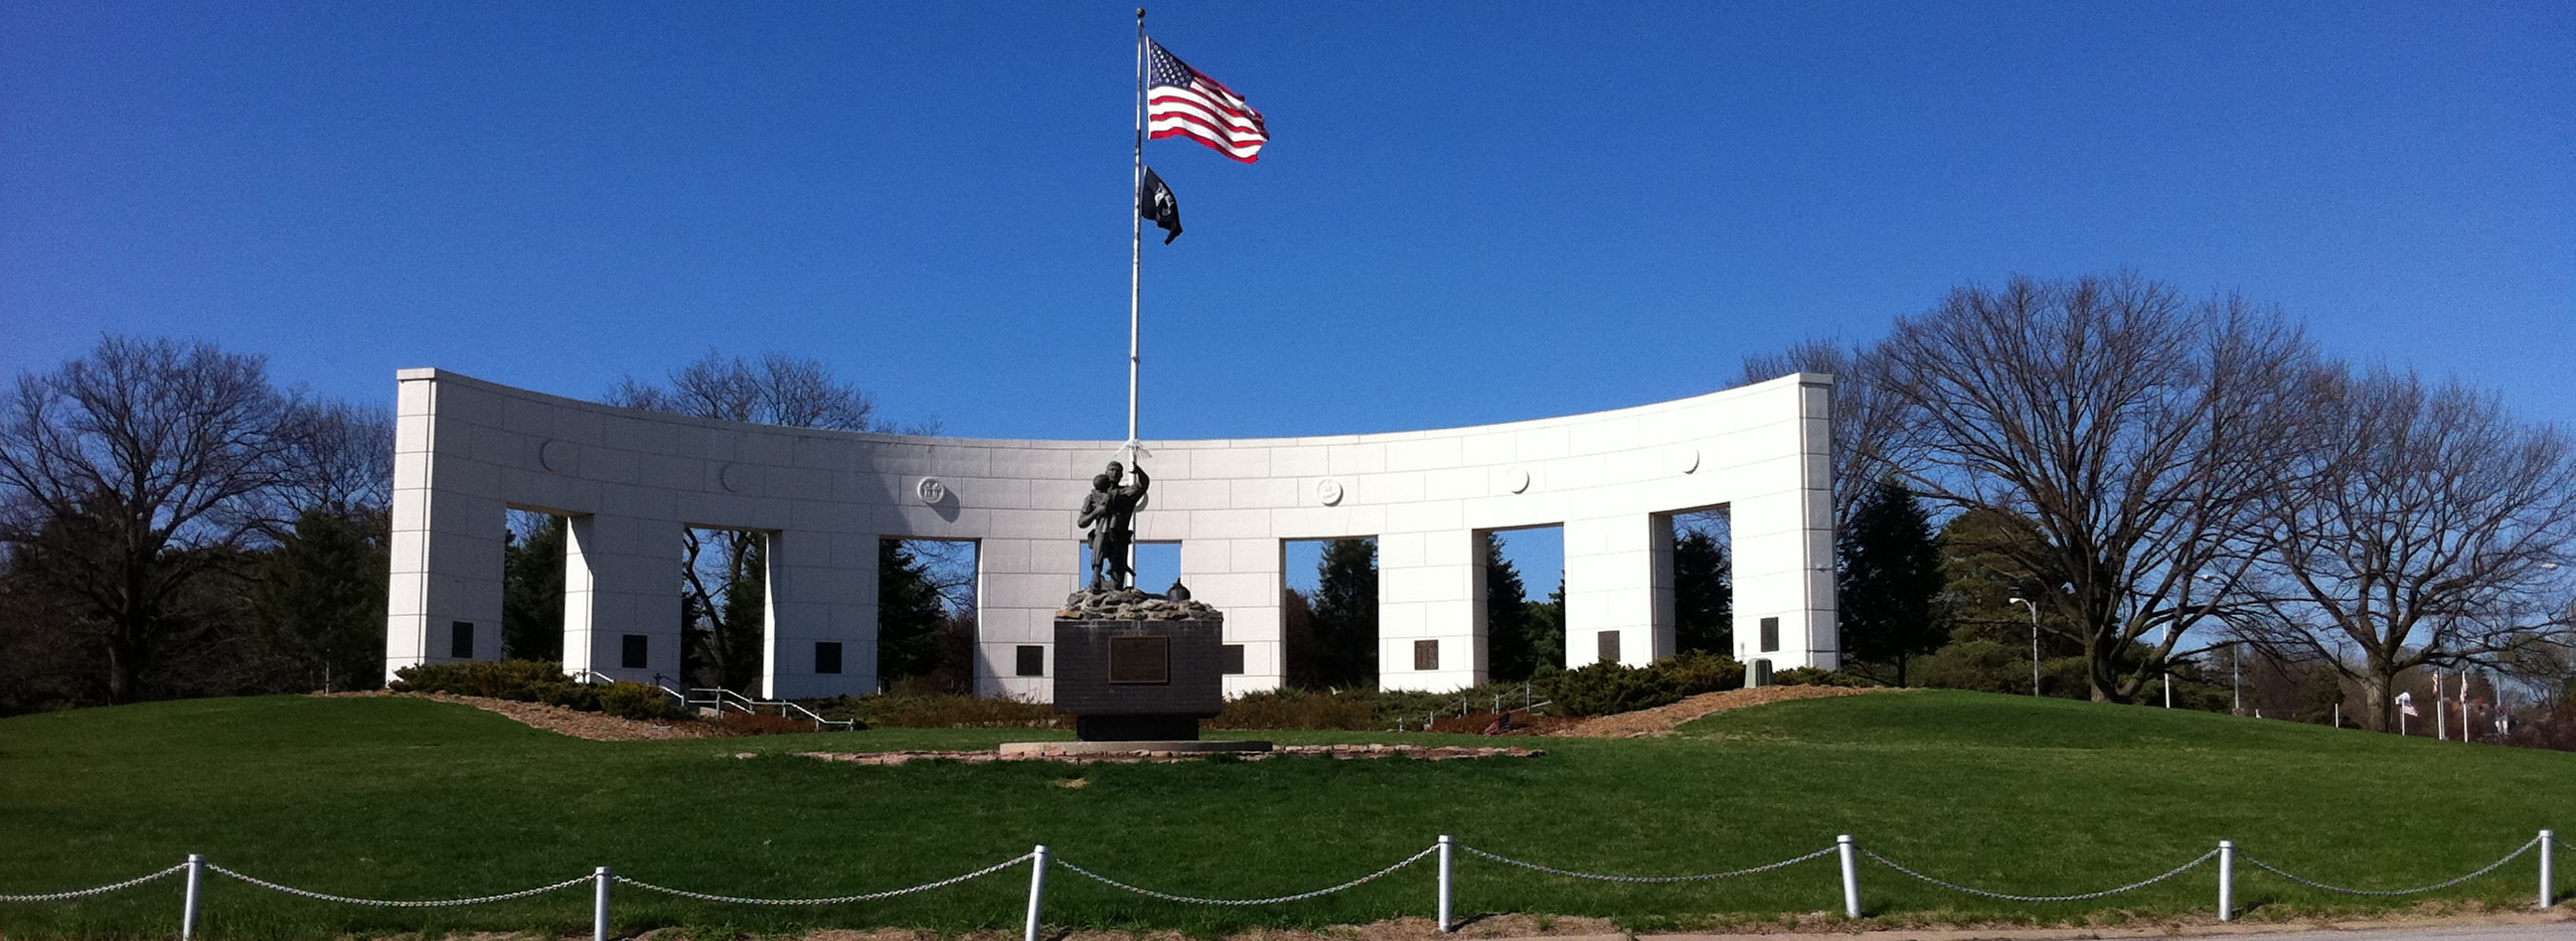 The history of Memorial Park in Omaha NE